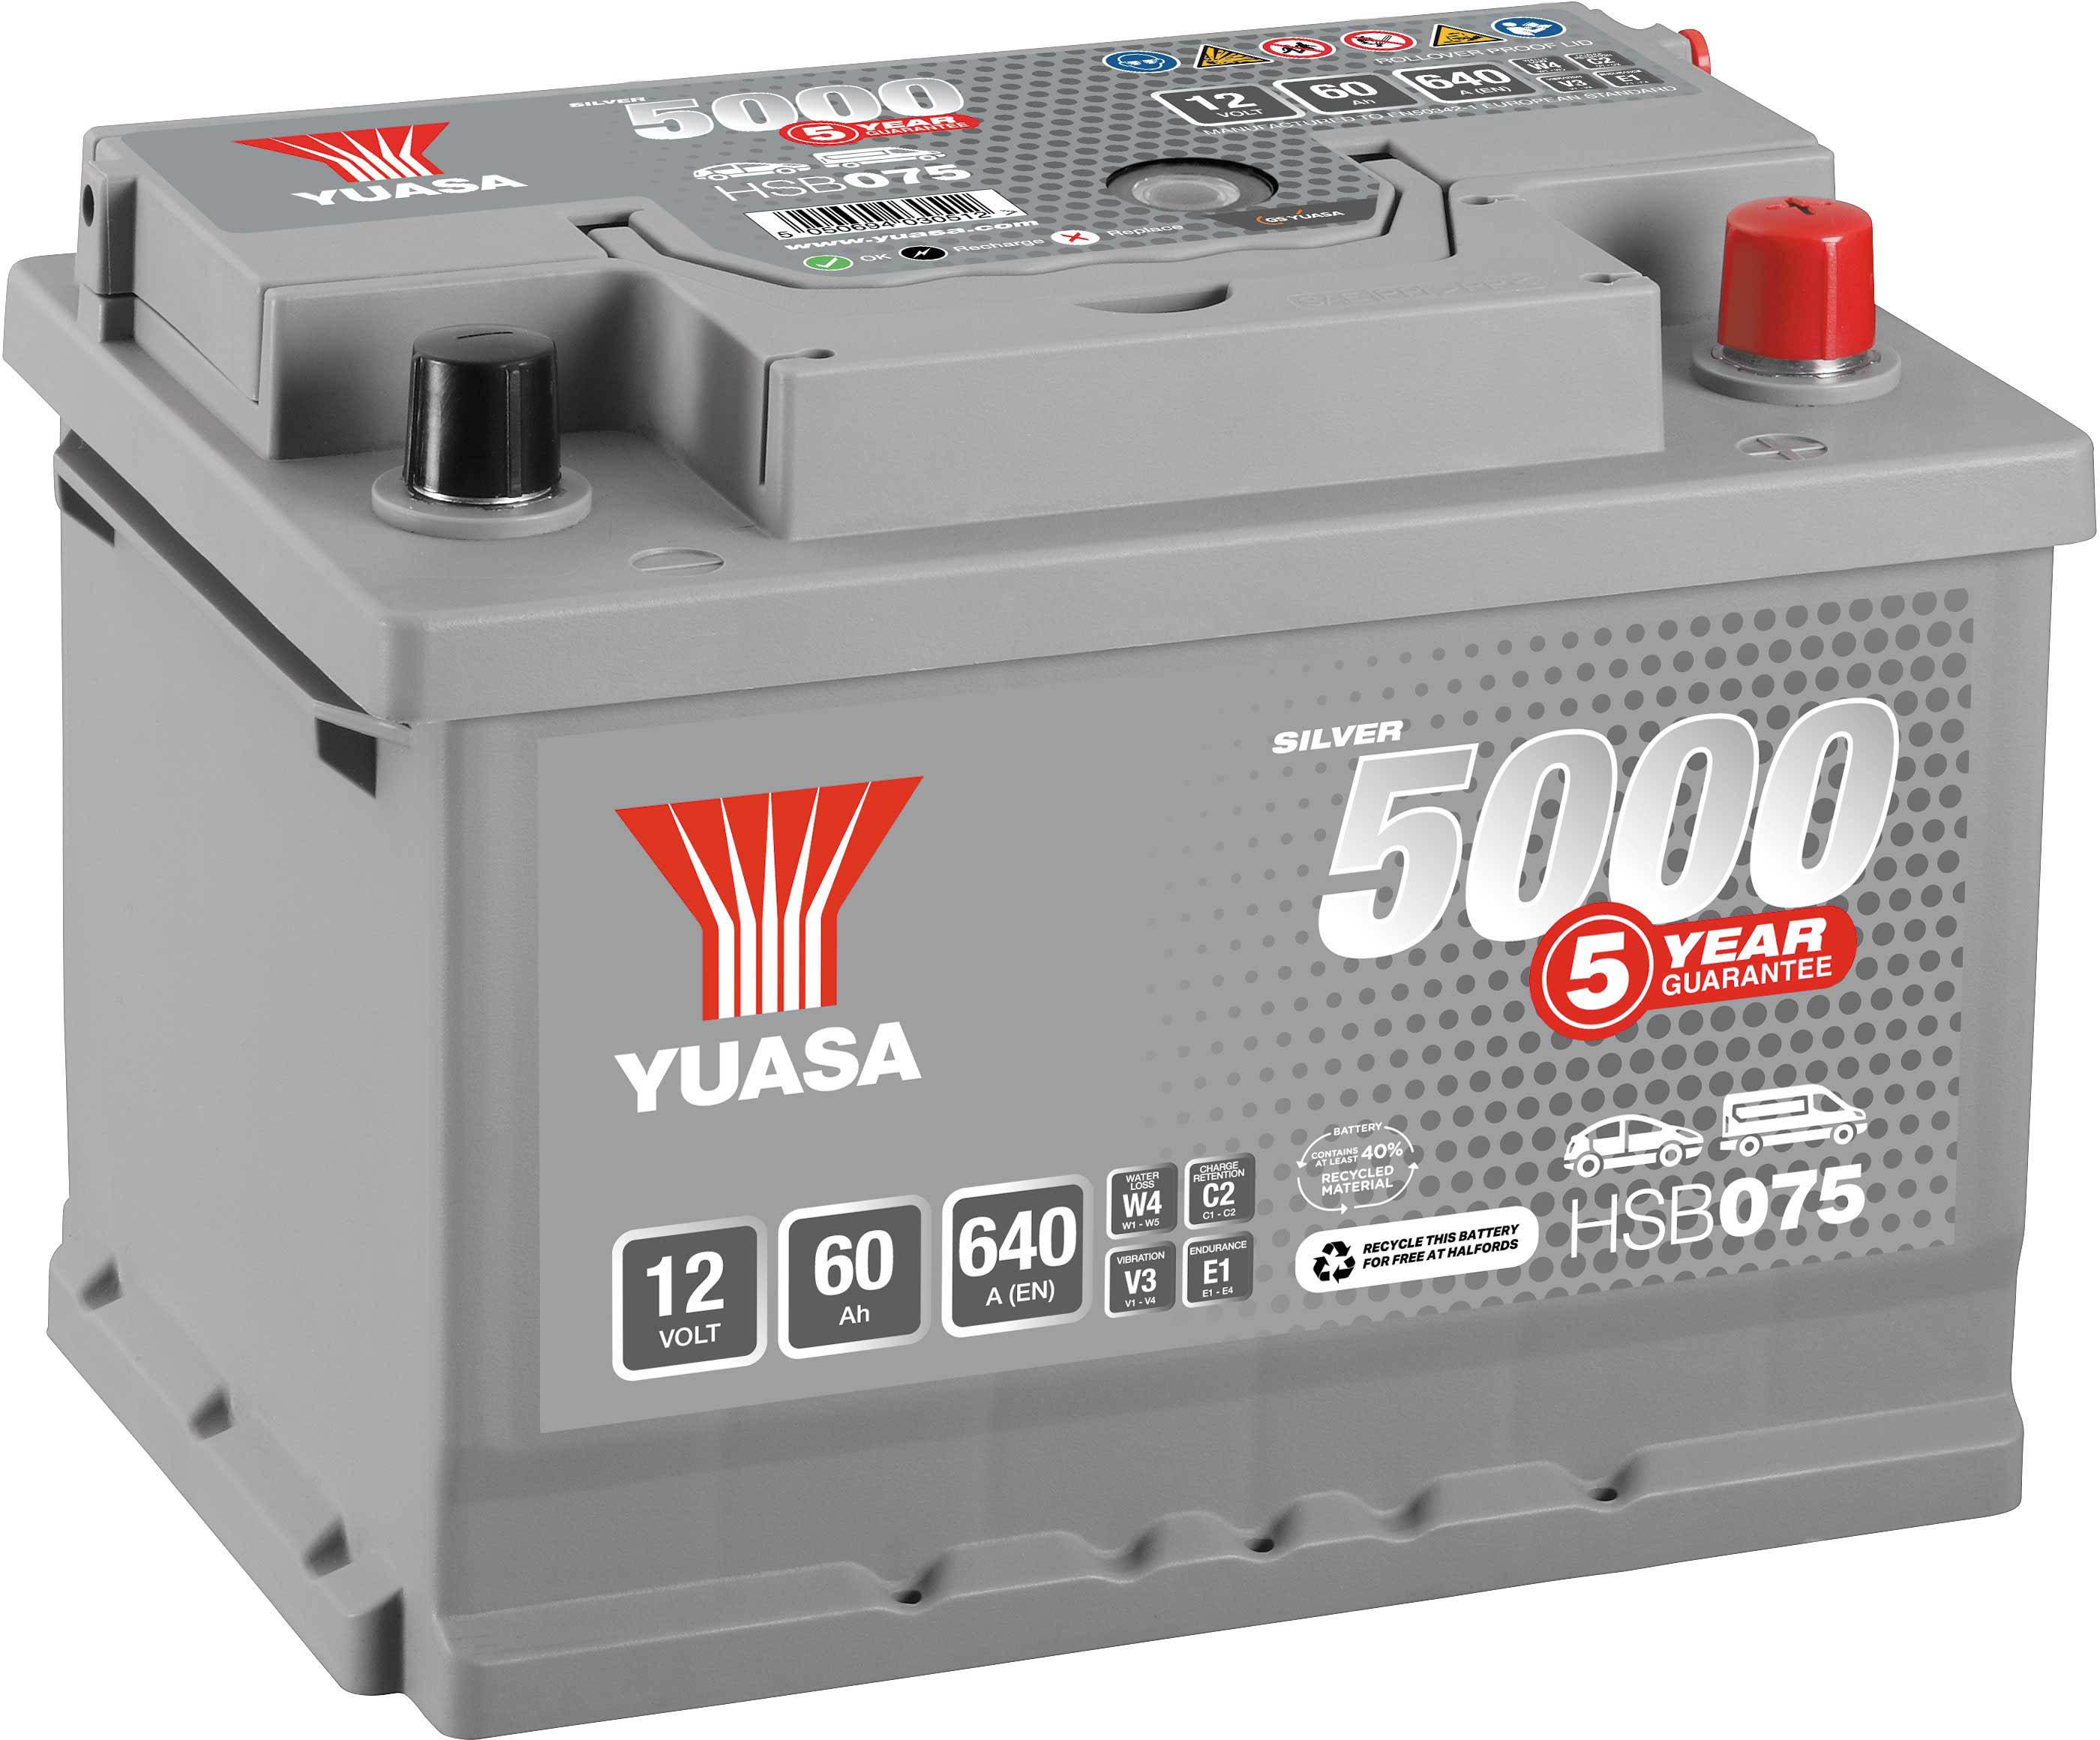 Yuasa Hsb075 Silver 12V Car Battery 5 Year Guarantee